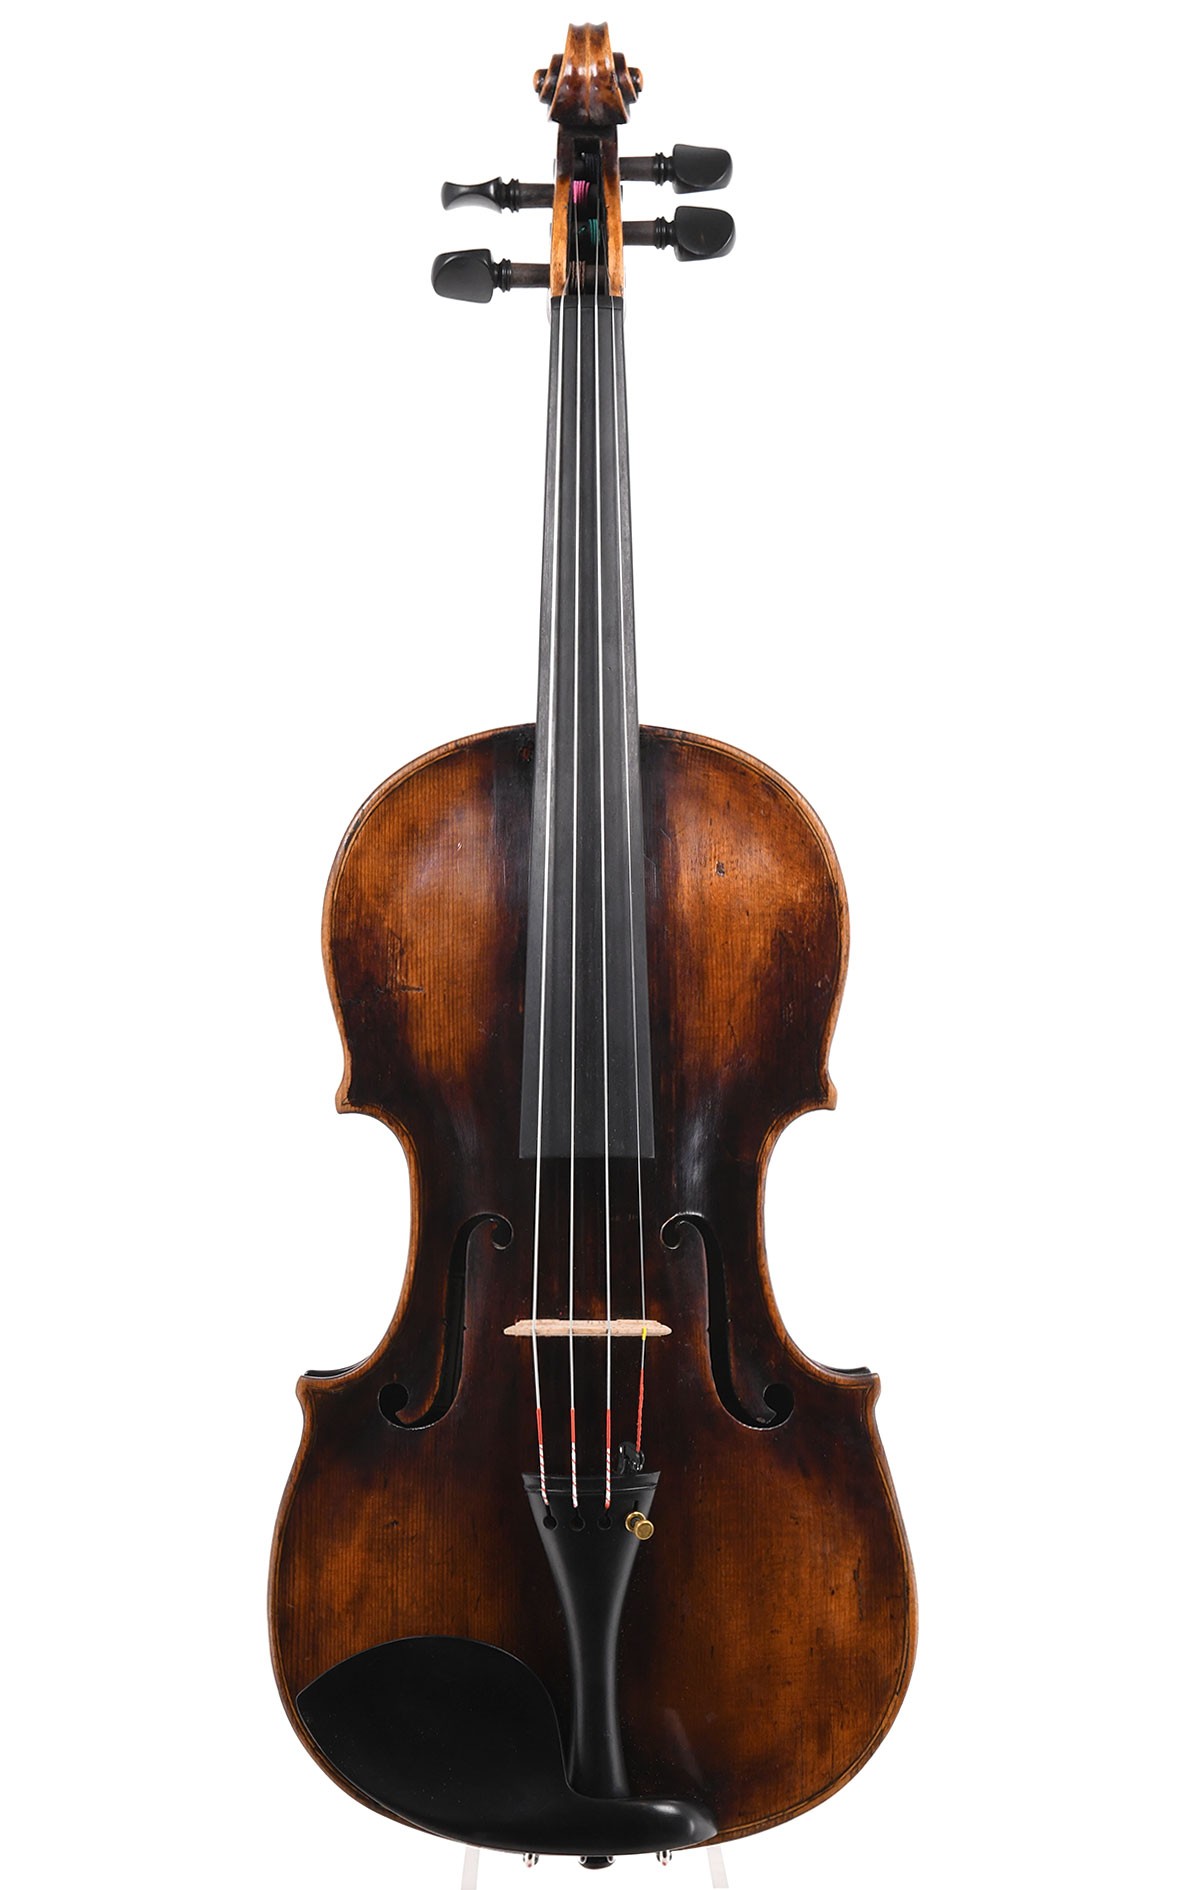 Violin from the 18th century by Anton Thir, Pressburg circa 1780